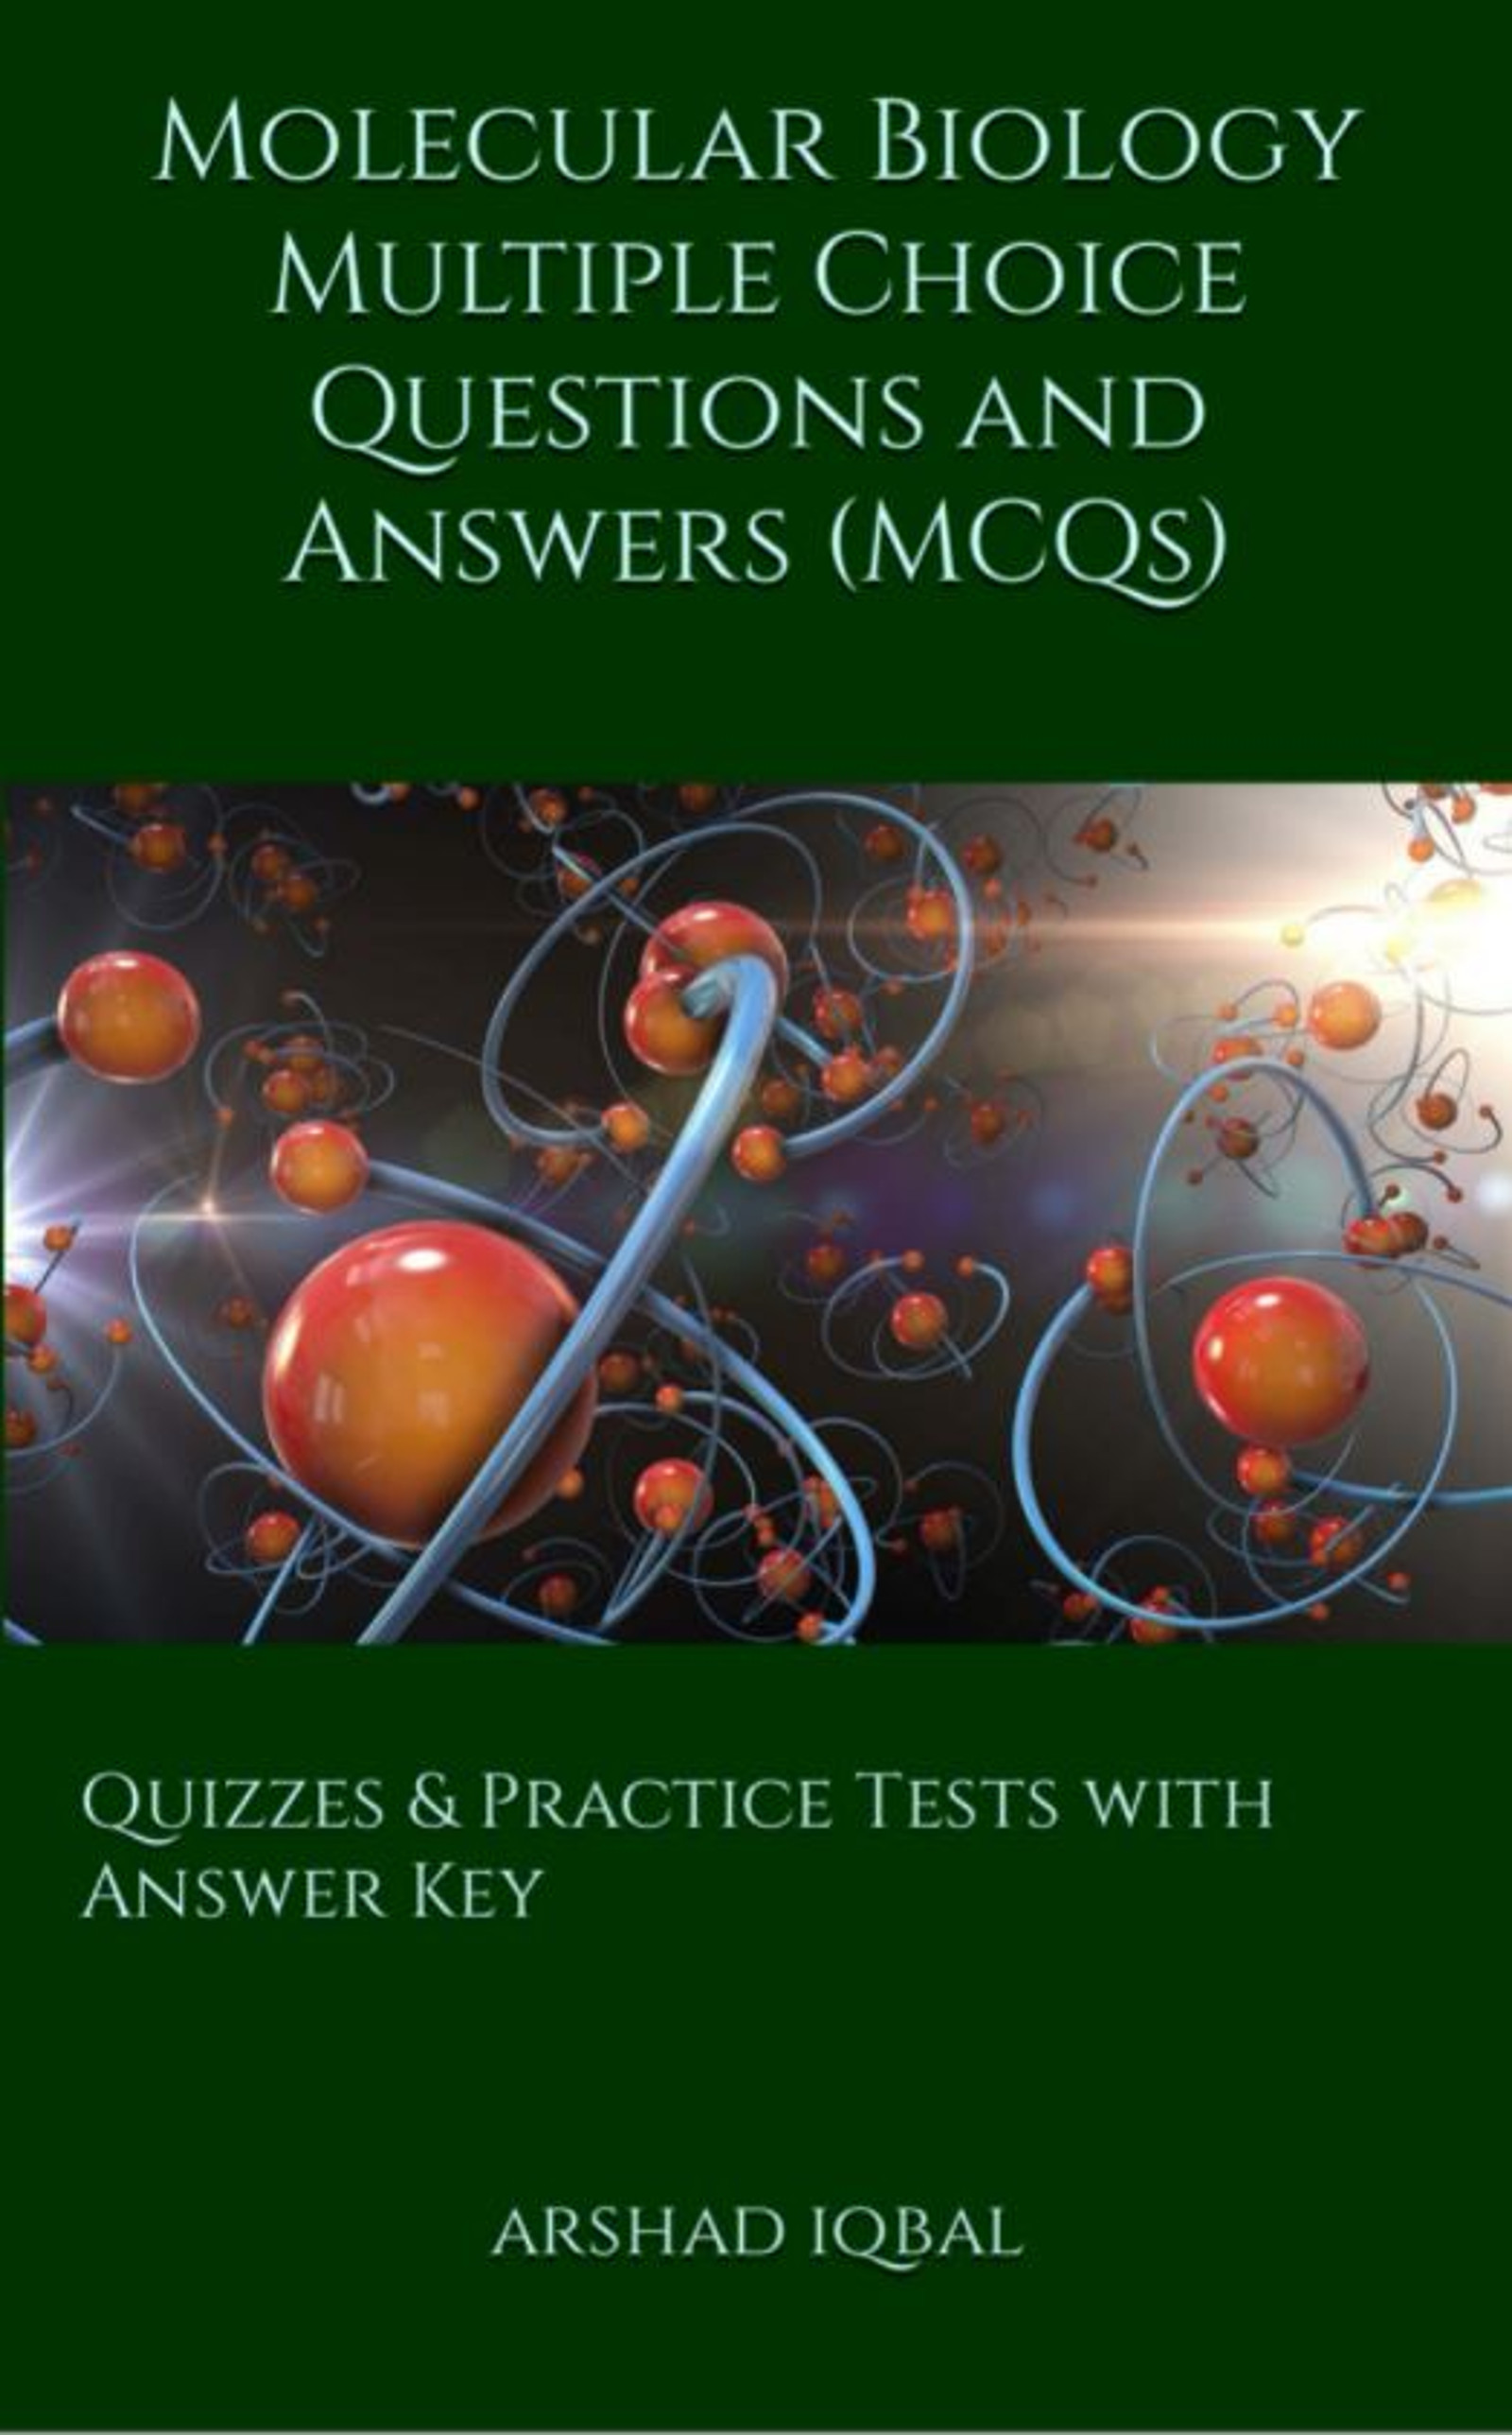 Molecular Biology MCQ Book PDF